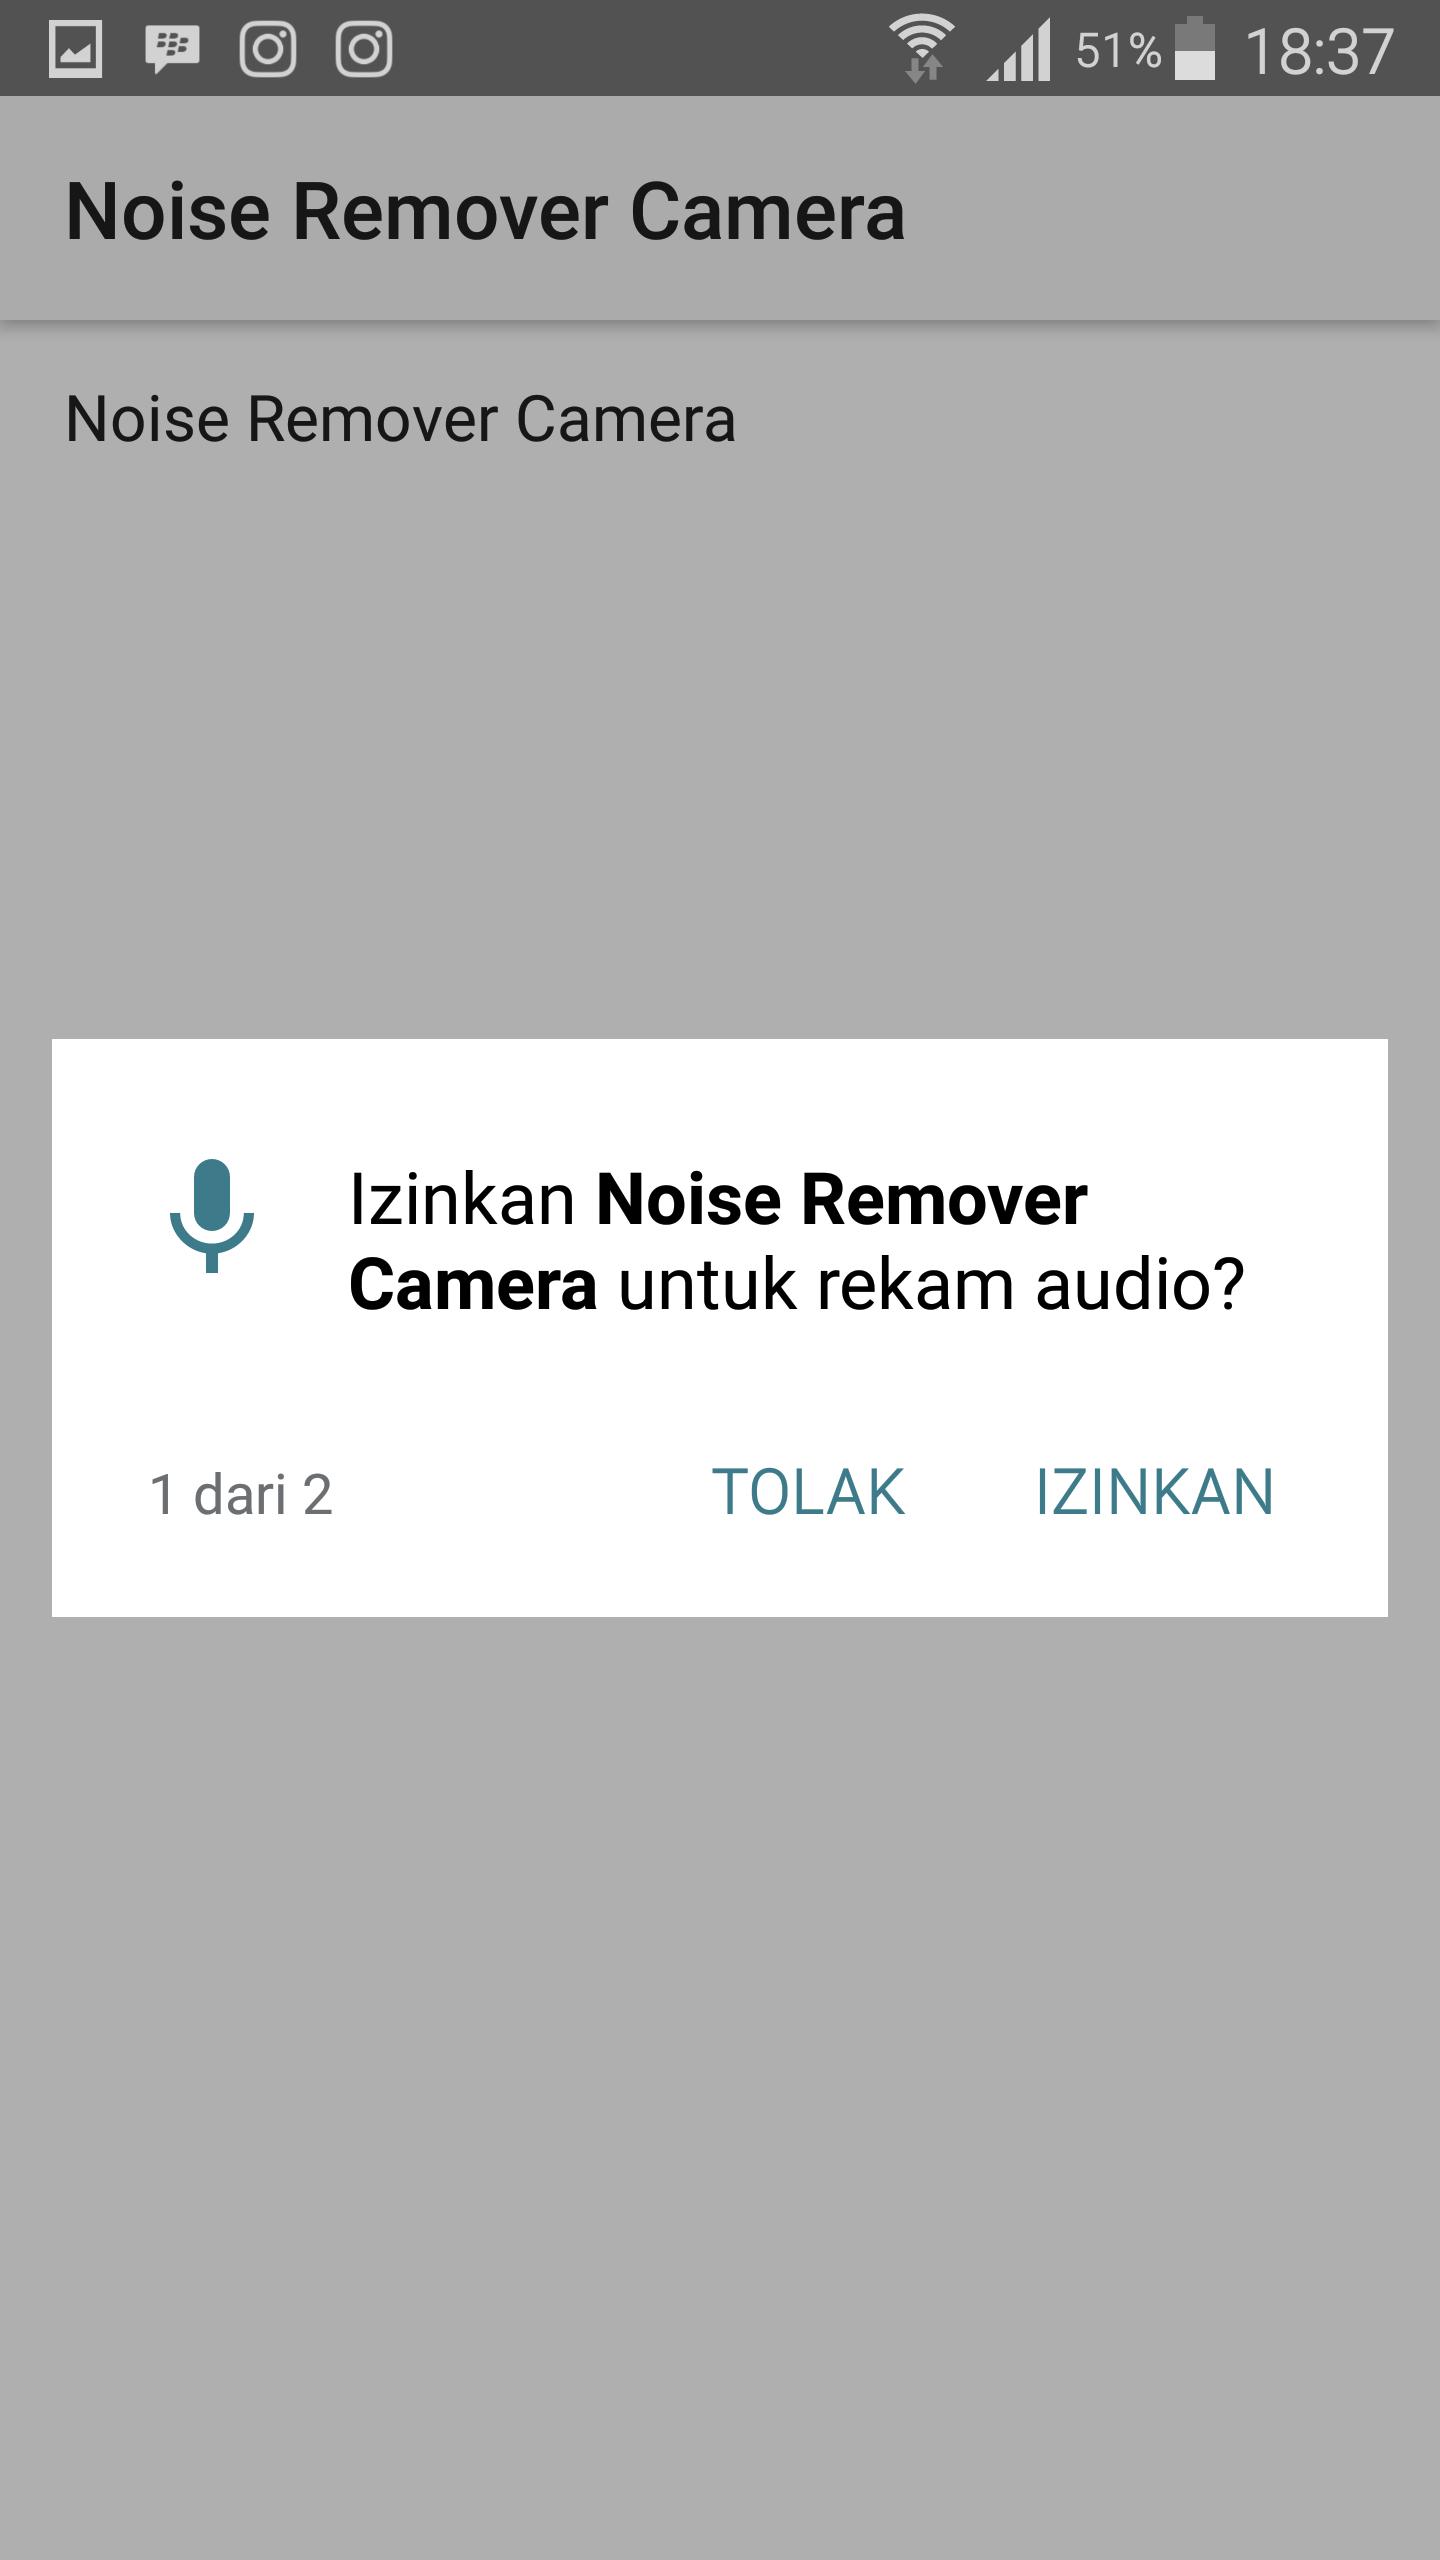 Noise Remover Camera